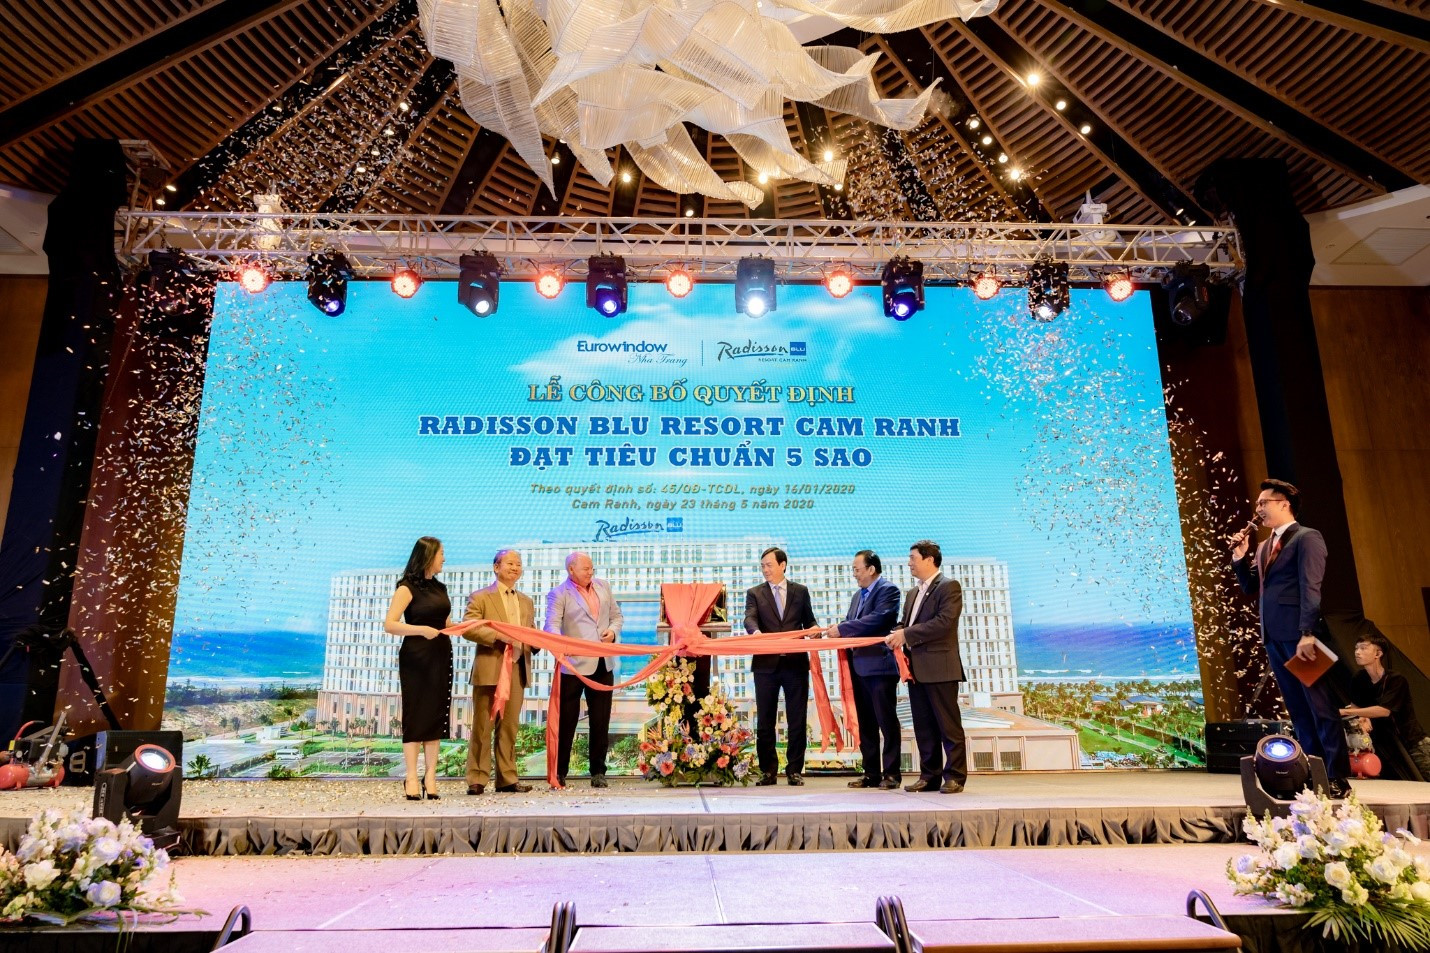 Dot Property Vietnam Awards 2020: Ocean Luxury Villa by Radisson Blu thắng lớn